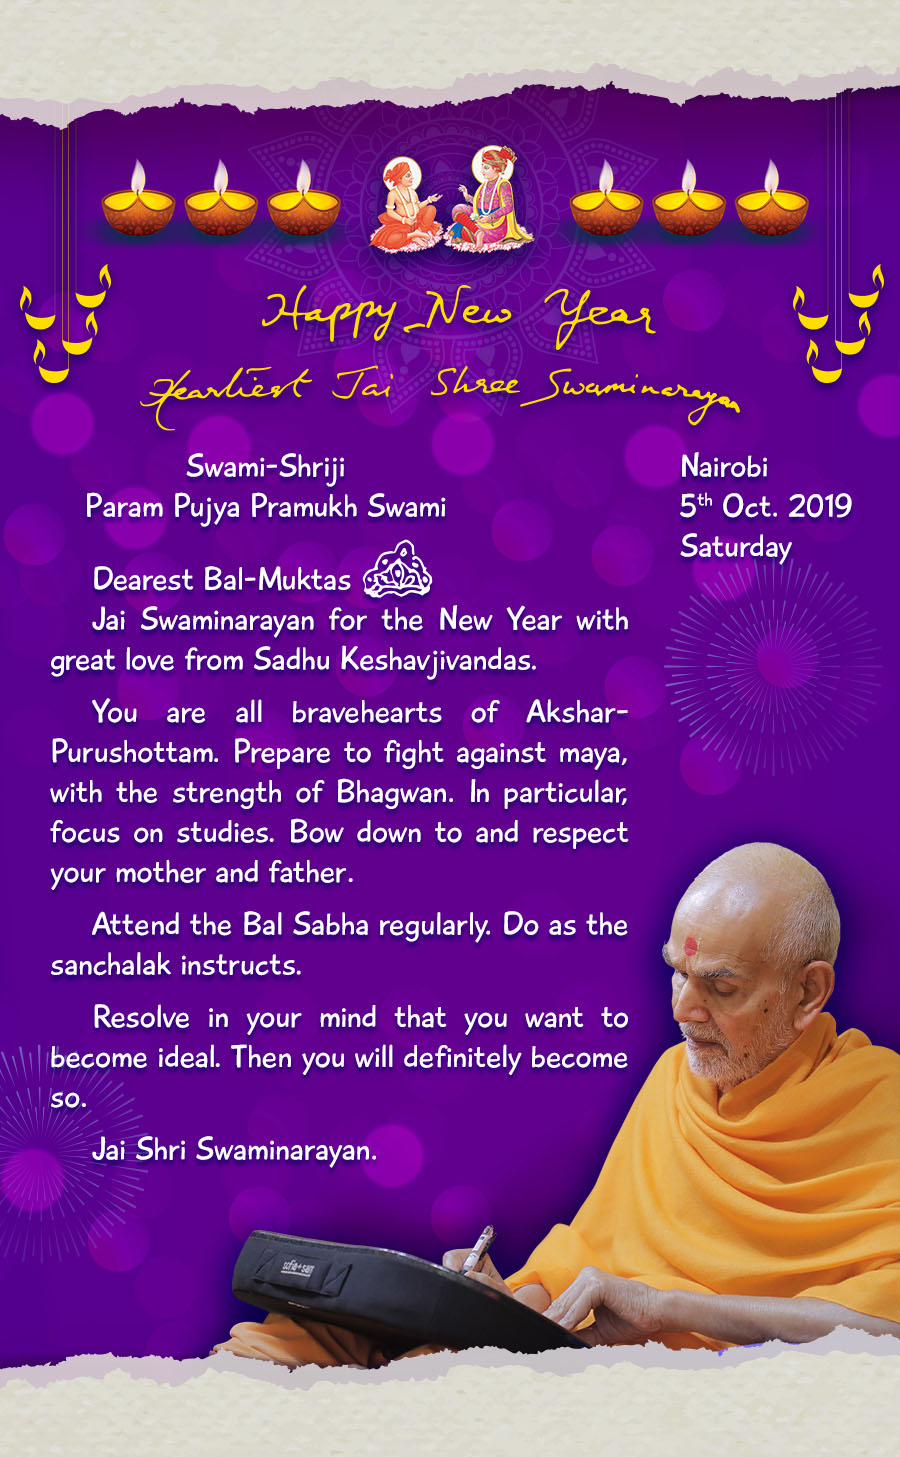 New Year's Greetings from Sadhu Keshavjivandas